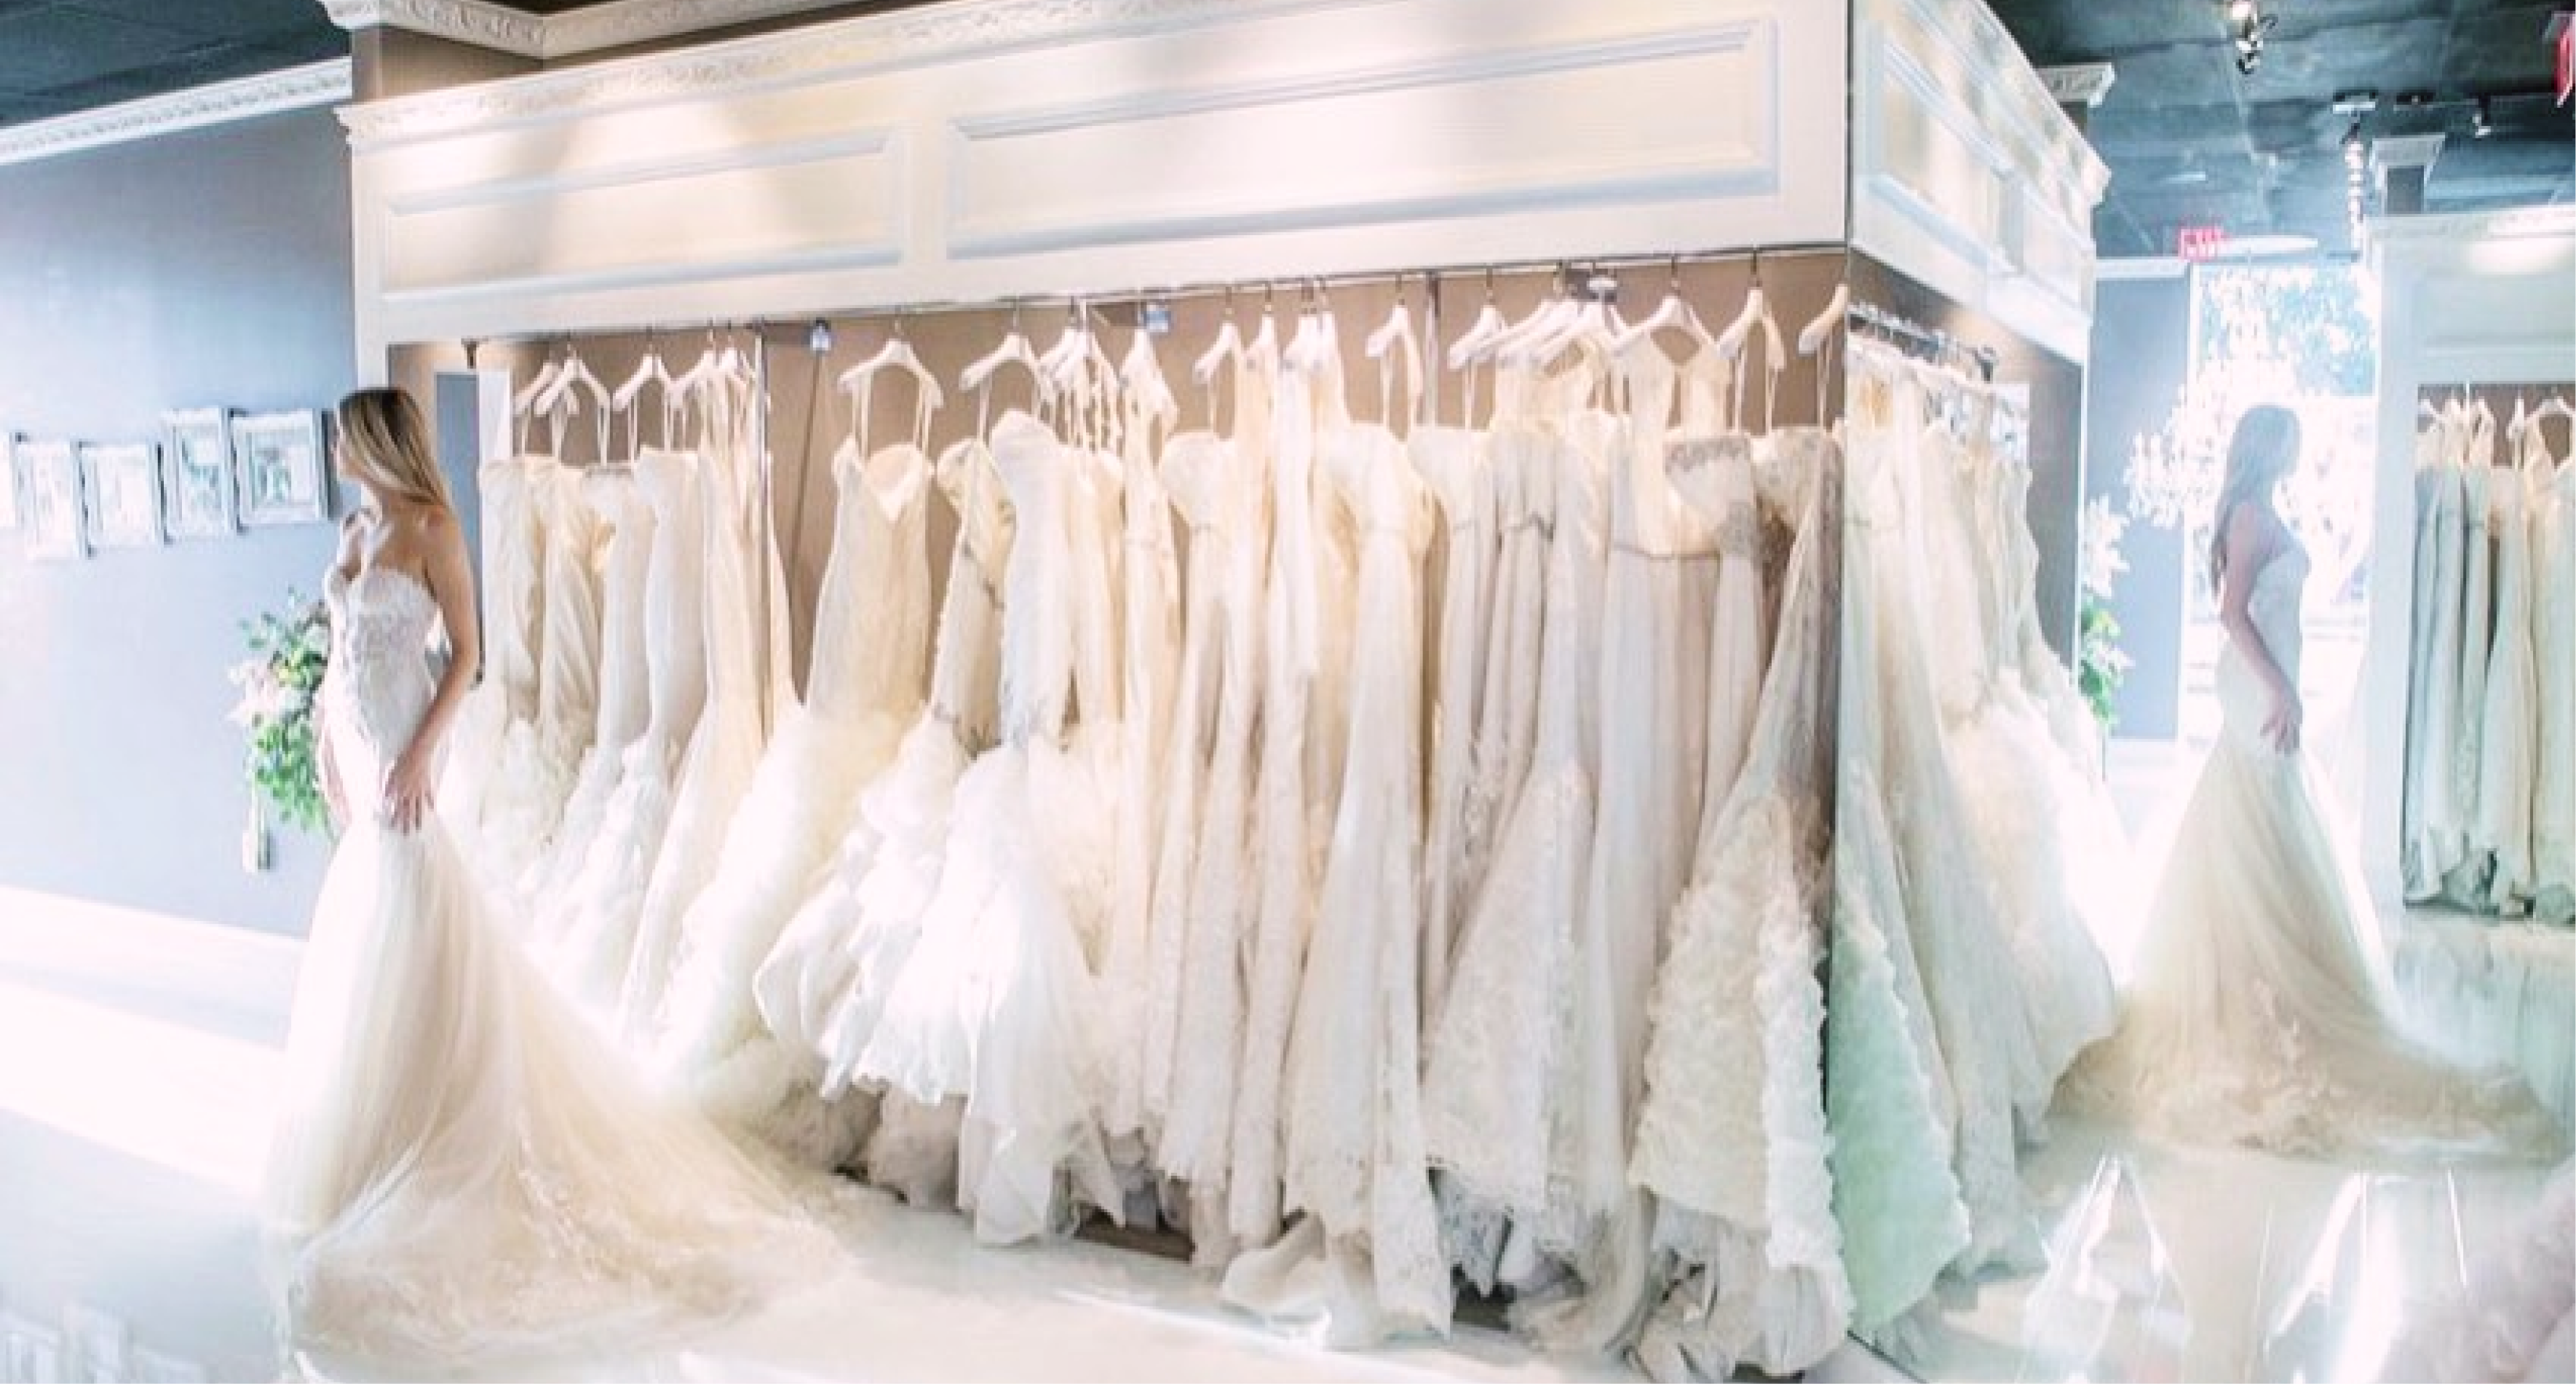 A Helpful Guide to Wedding Dress Shopping